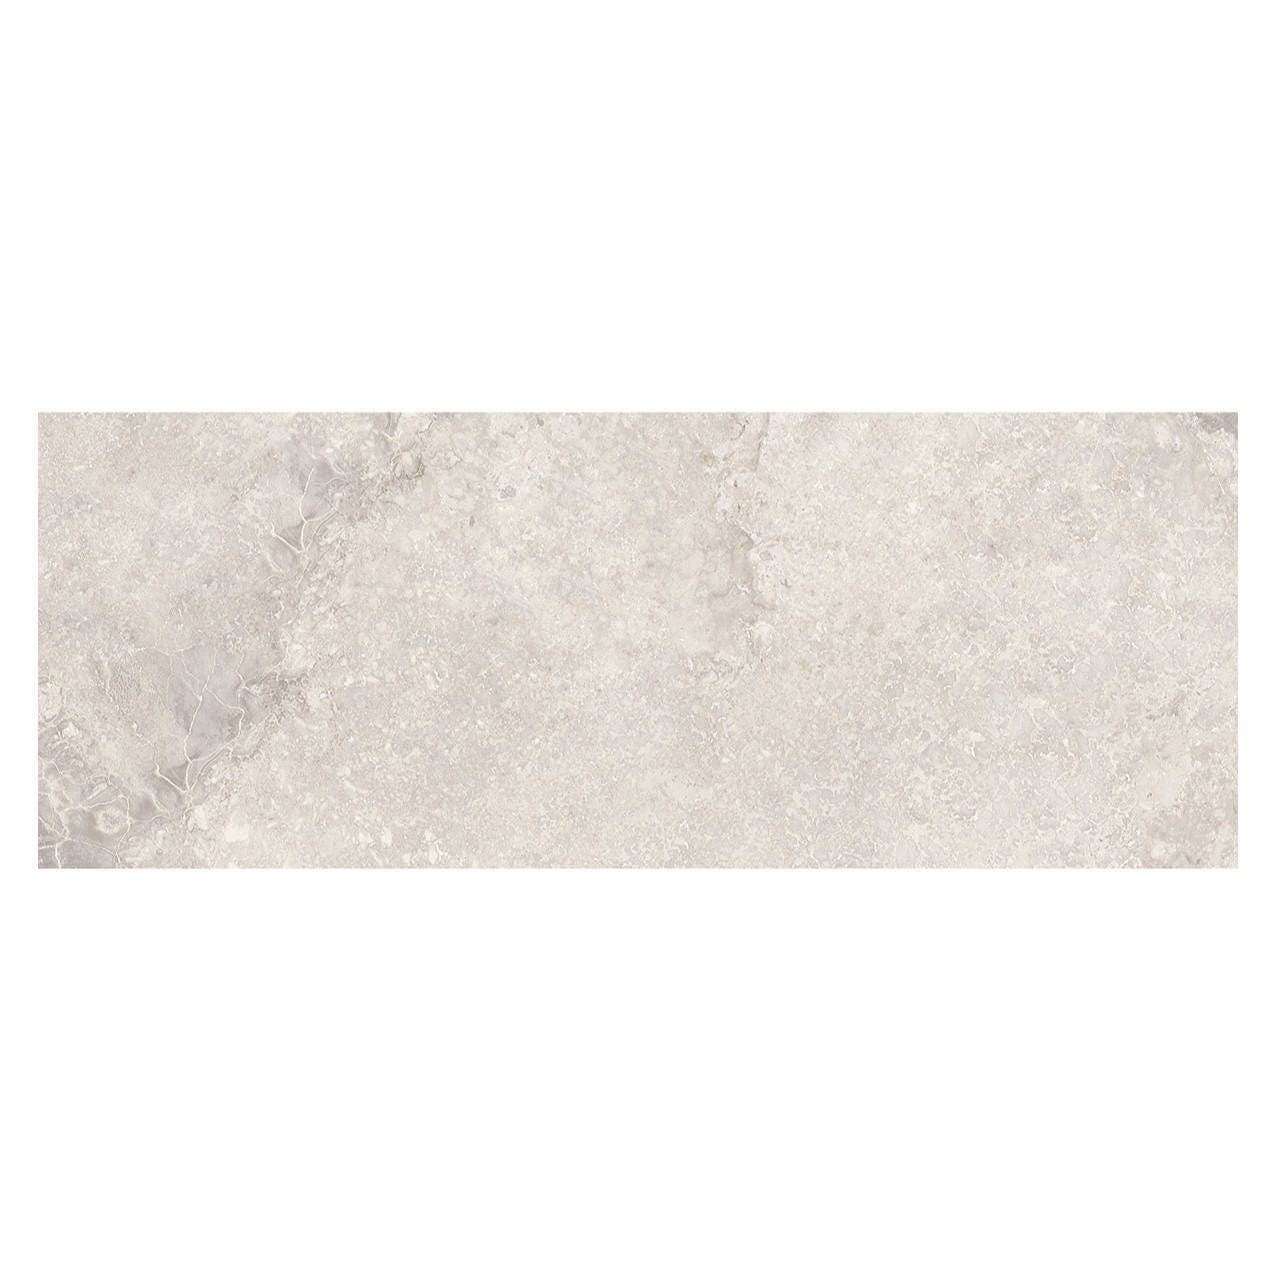 cheekbone argument Feat Dedeman - Faianta baie / bucatarie rectificata Rockstone Pearl, gri, mata,  imitatie piatra, 33.3 x 90 cm - Dedicat planurilor tale